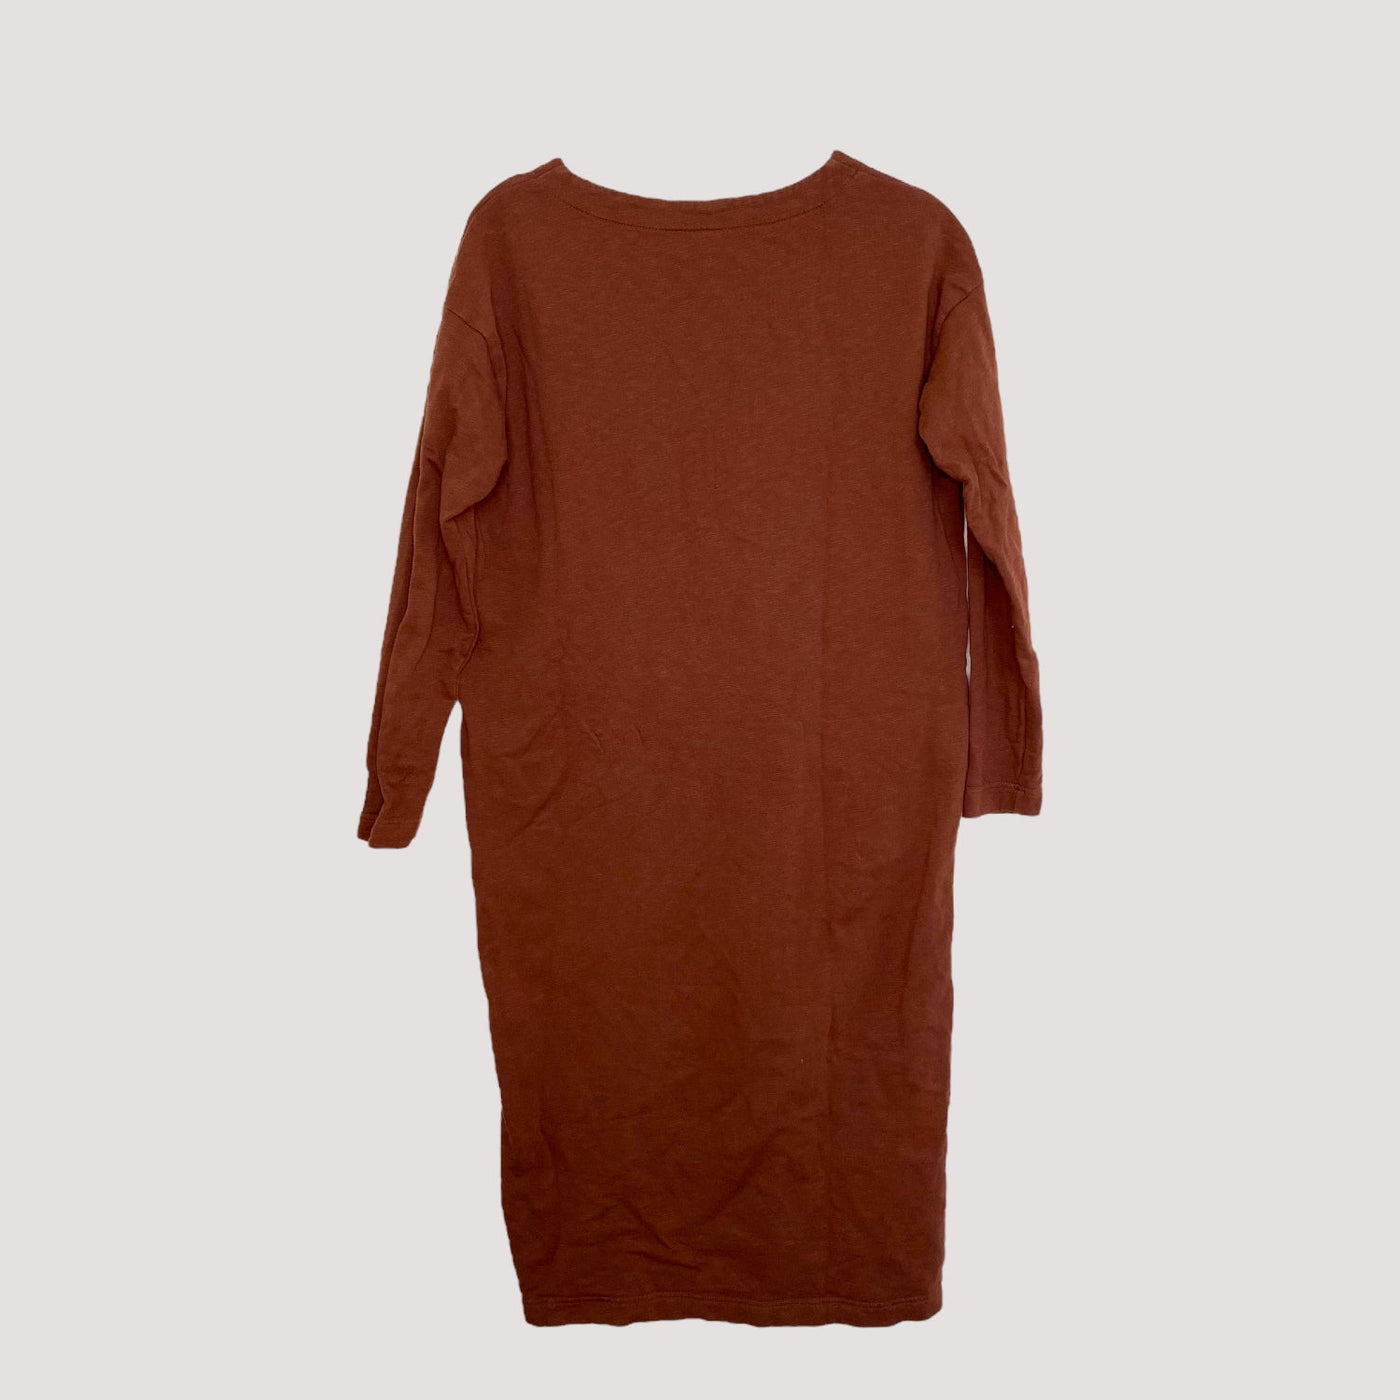 sweat tunic dress, brown | women S/M